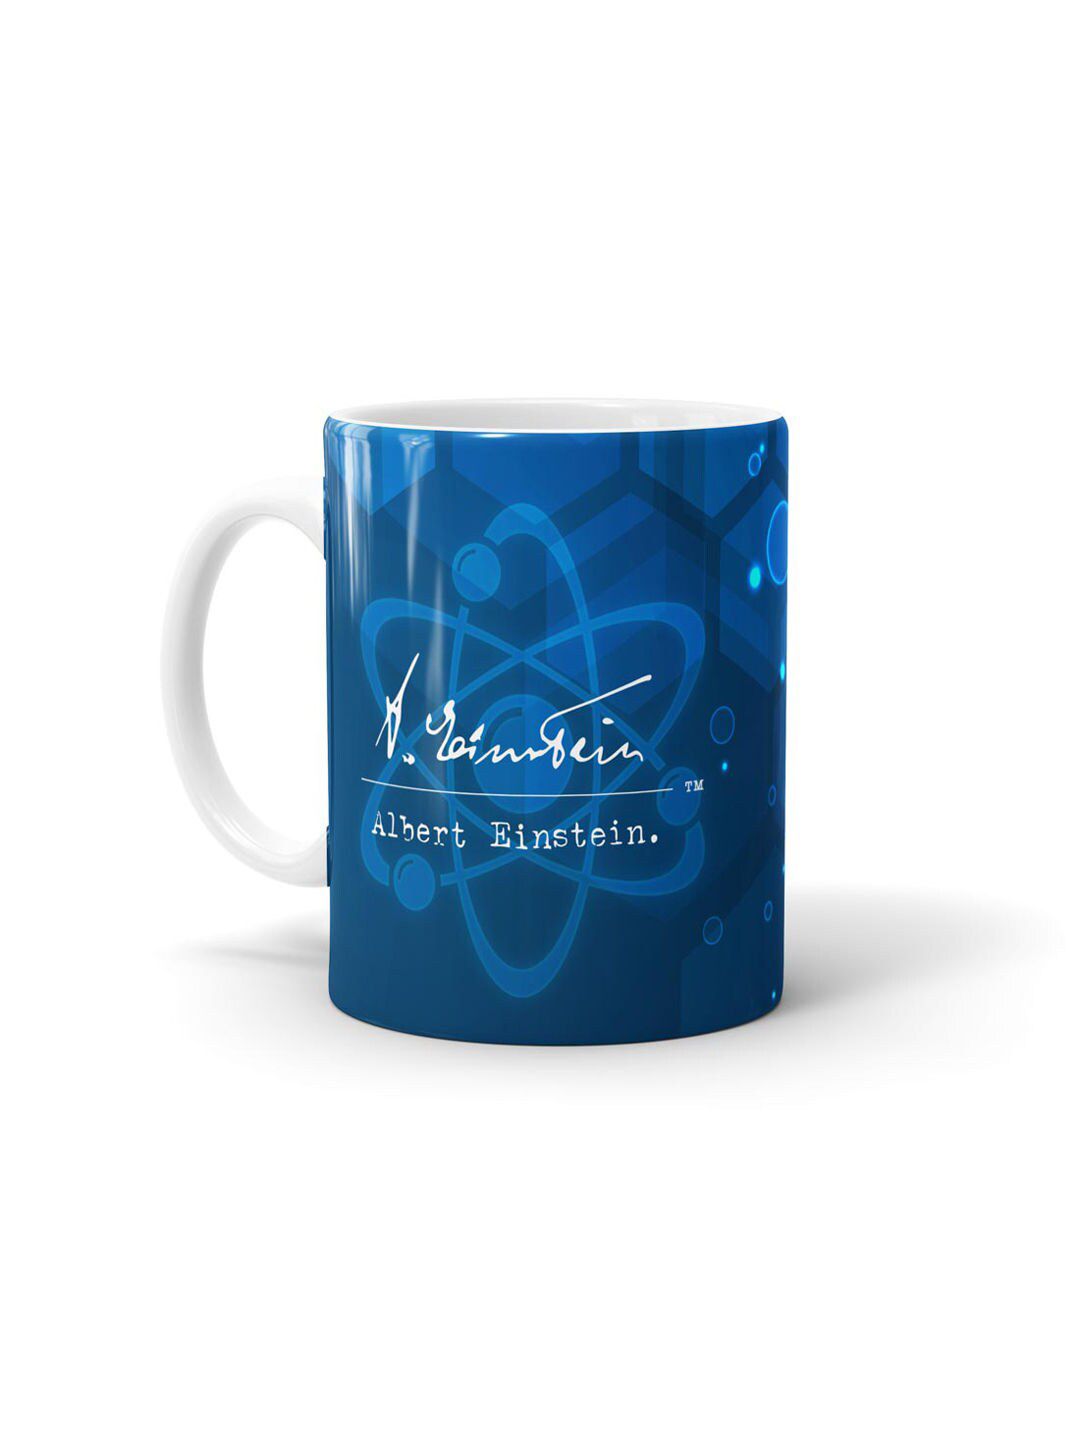 macmerise Blue & White Printed Ceramic Glossy Mug Price in India